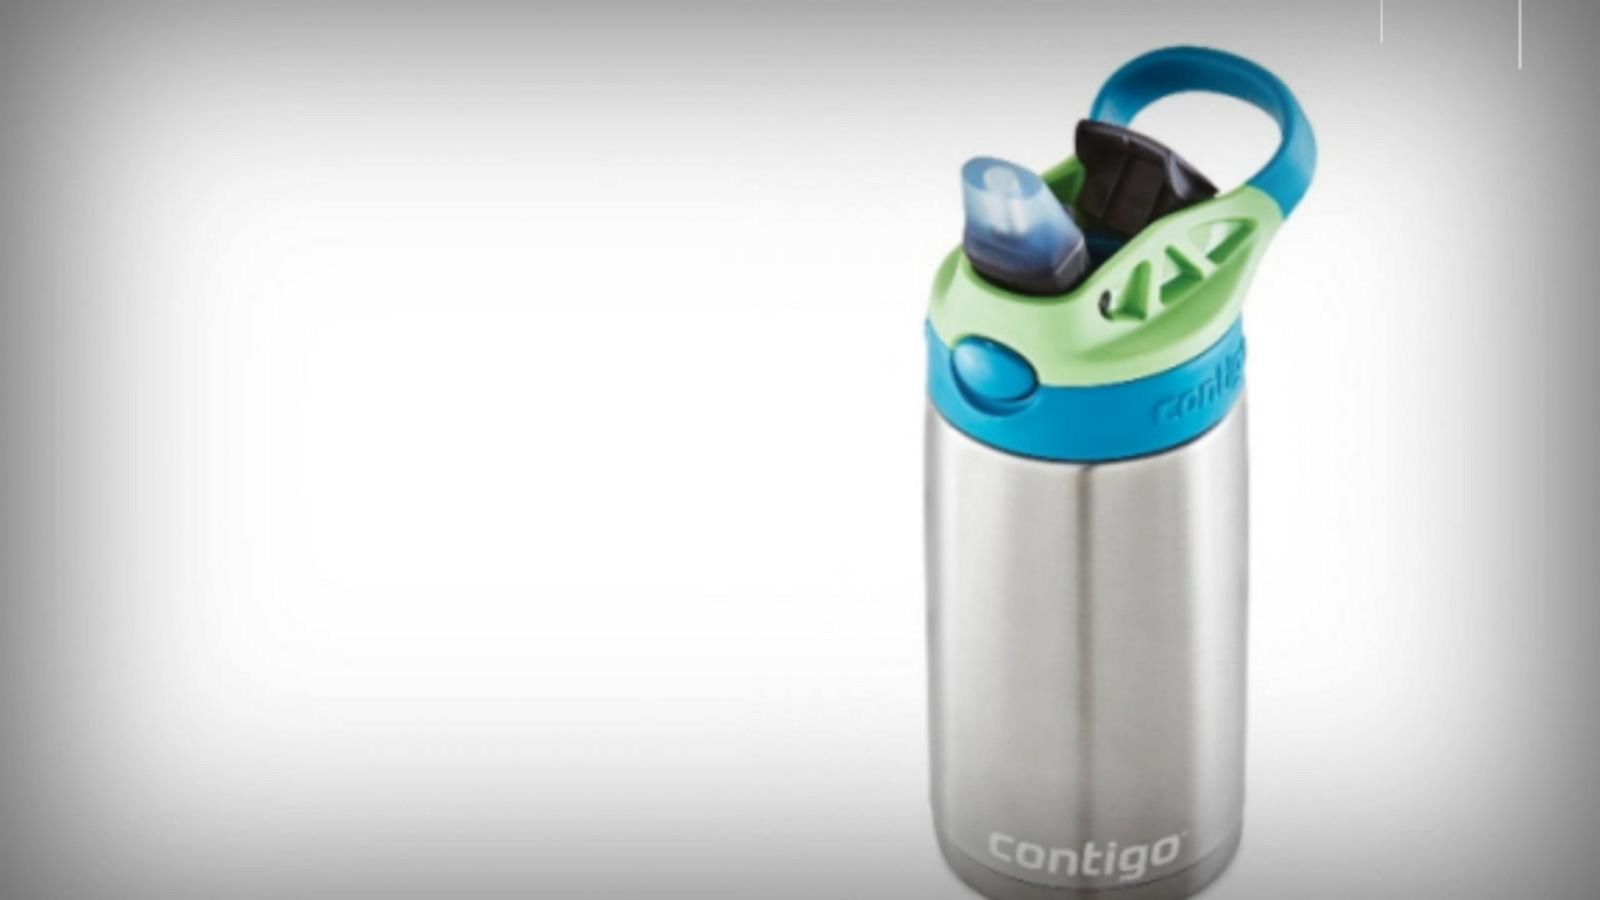 Contigo Kids Cleanable Water Bottles recalled due to choking hazard